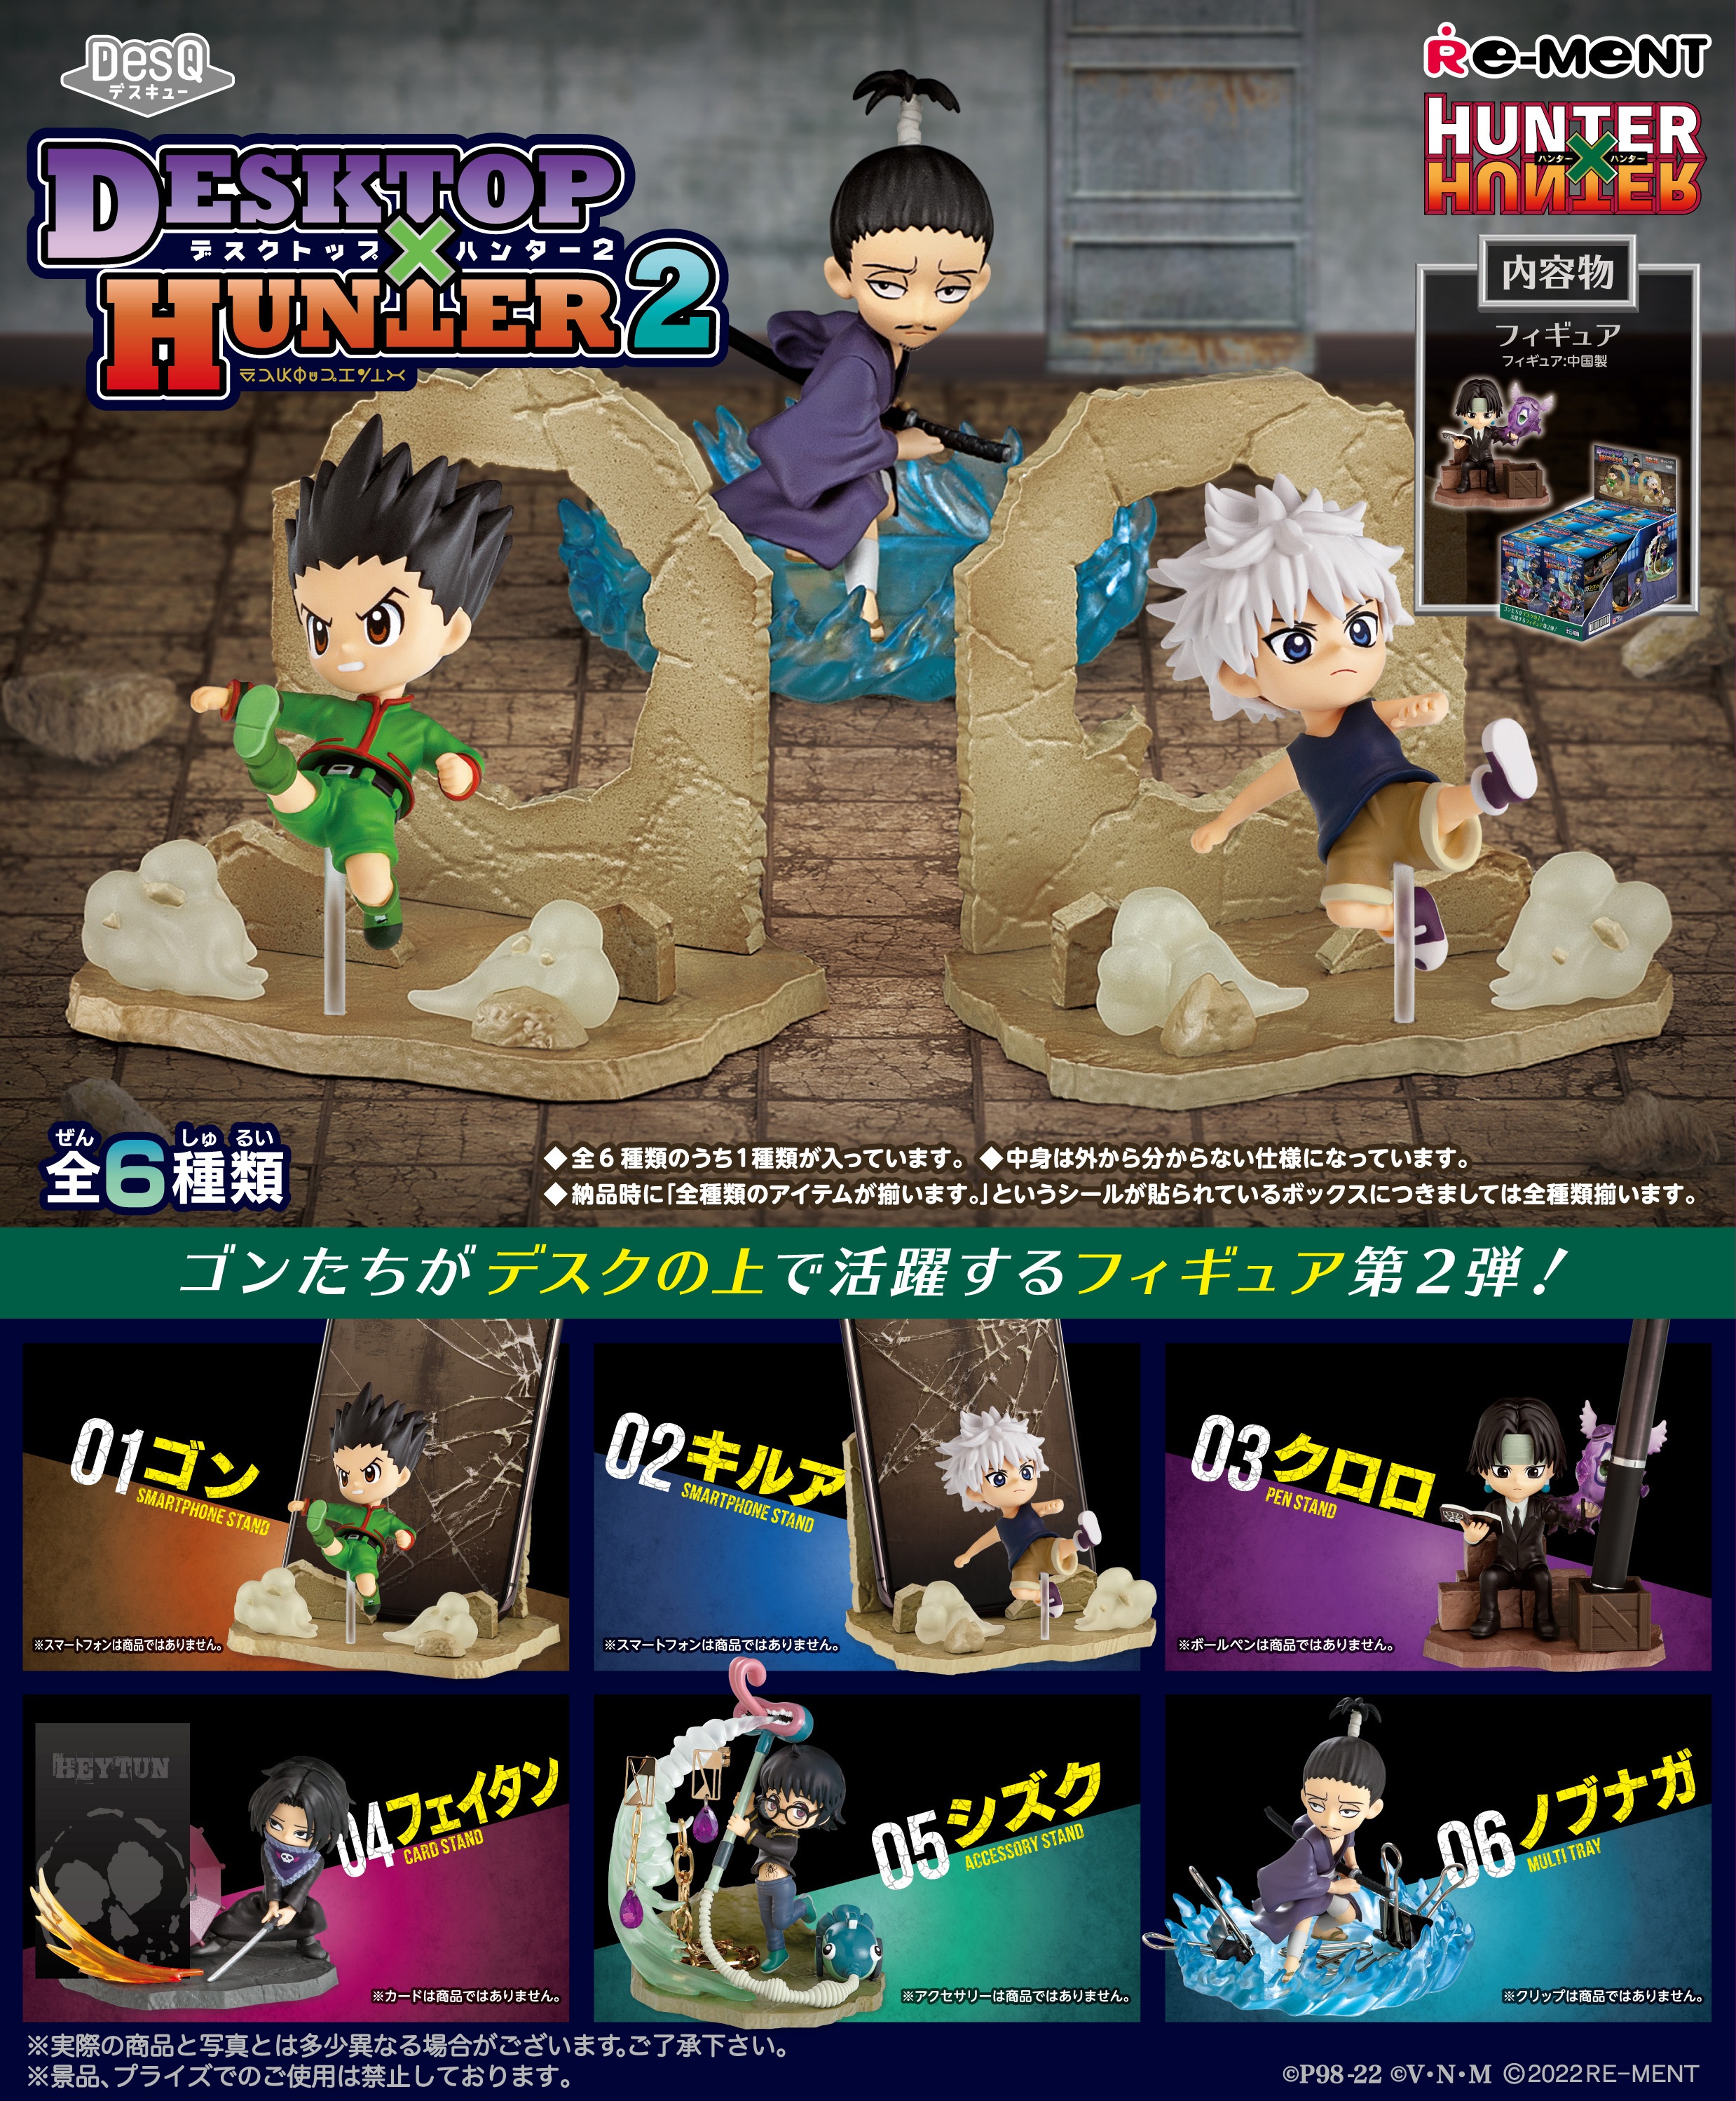 AmiAmi [Character & Hobby Shop]  CAN Badge Hunter x Hunter 10Pack